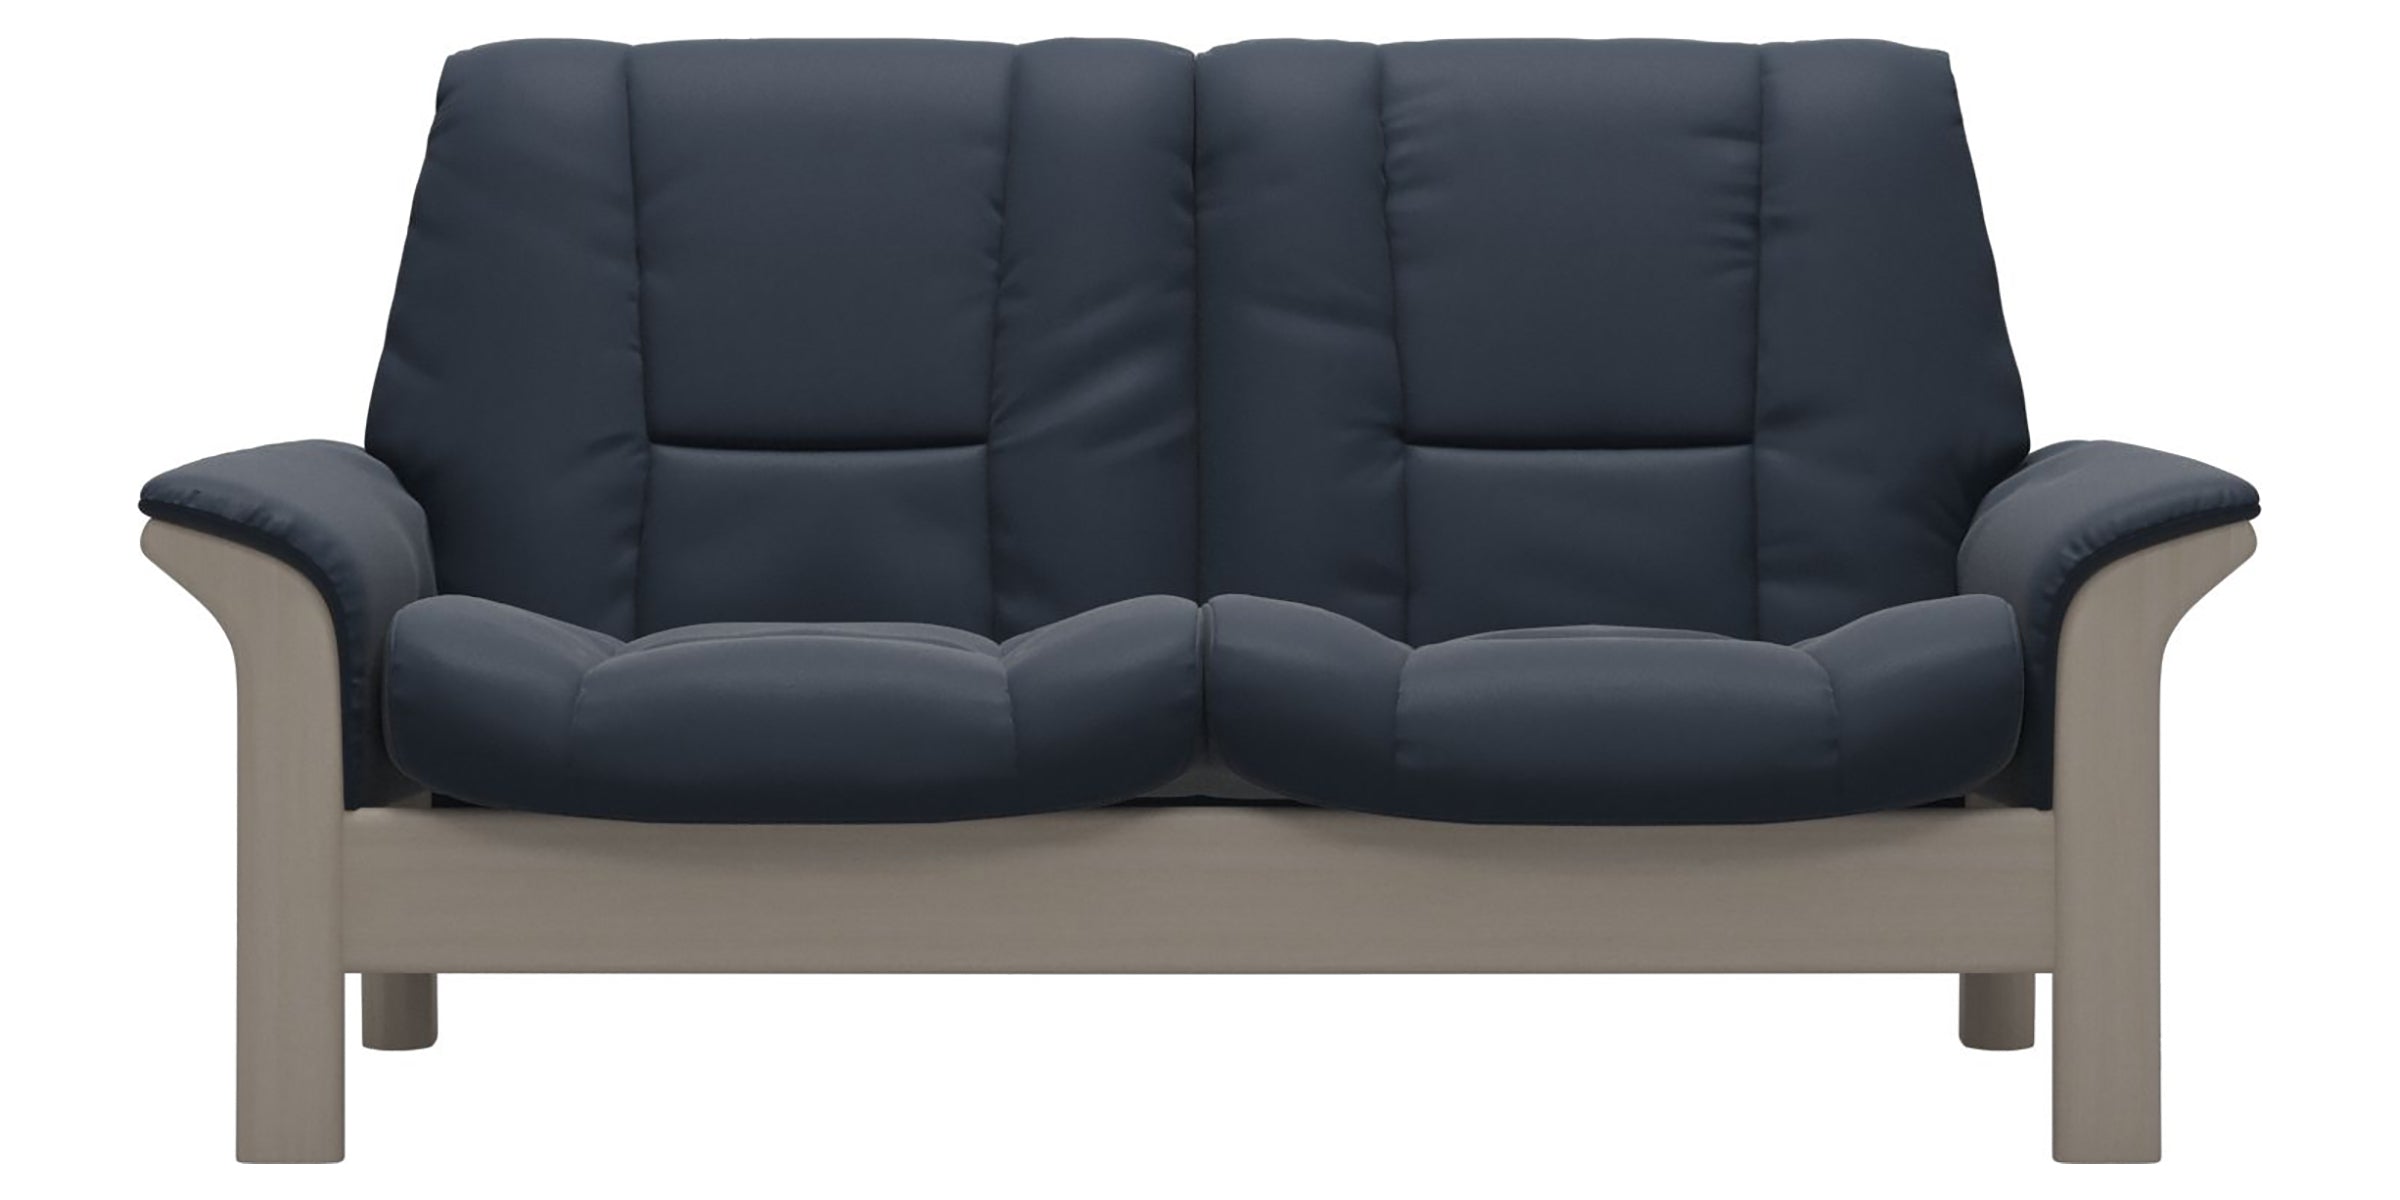 Paloma Leather Oxford Blue and Whitewash Base | Stressless Buckingham 2-Seater Low Back Sofa | Valley Ridge Furniture